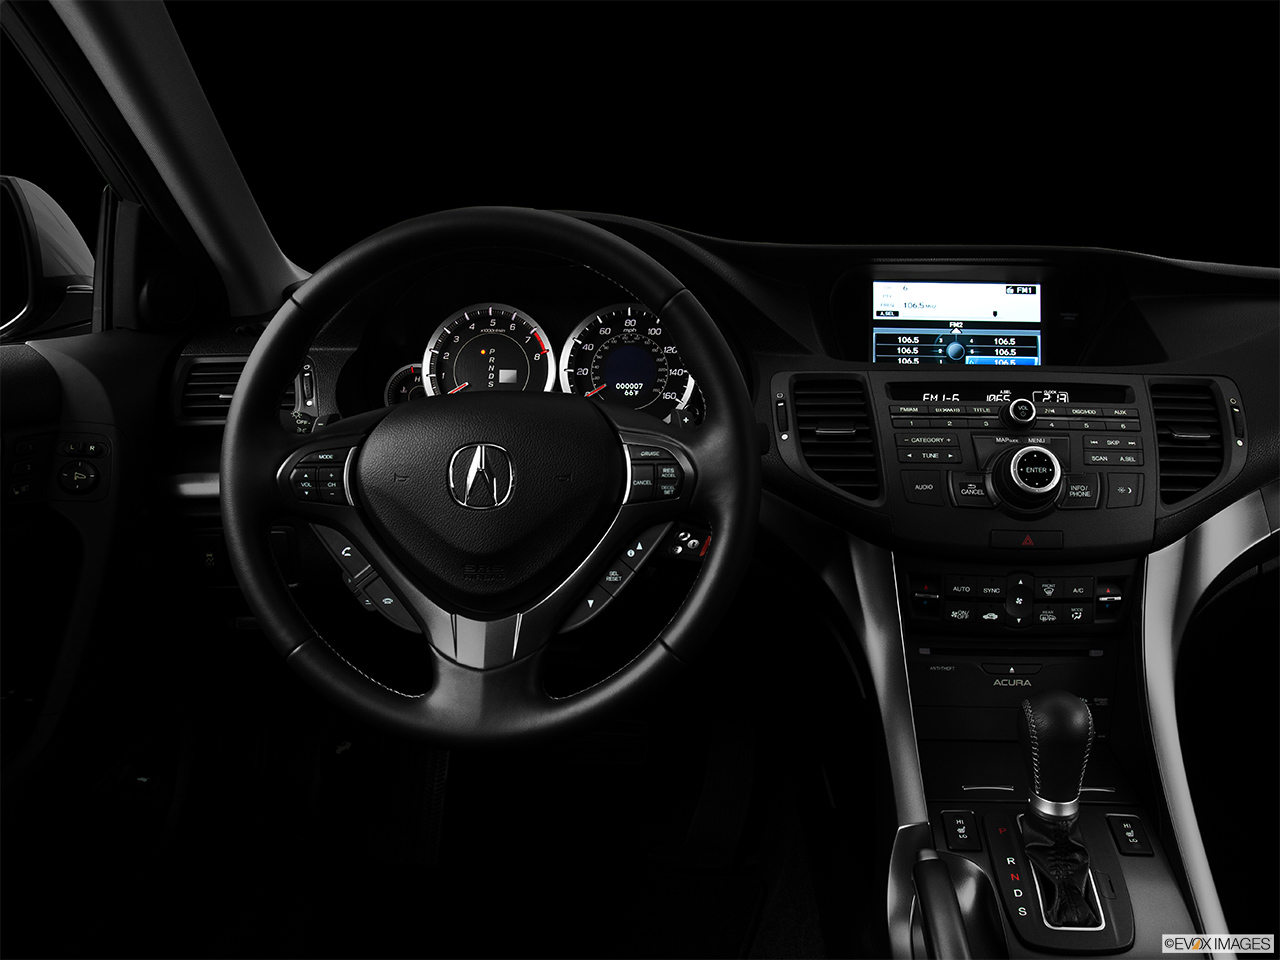 2014 Acura TSX Sport Wagon Base Centered wide dash shot - "night" shot. 